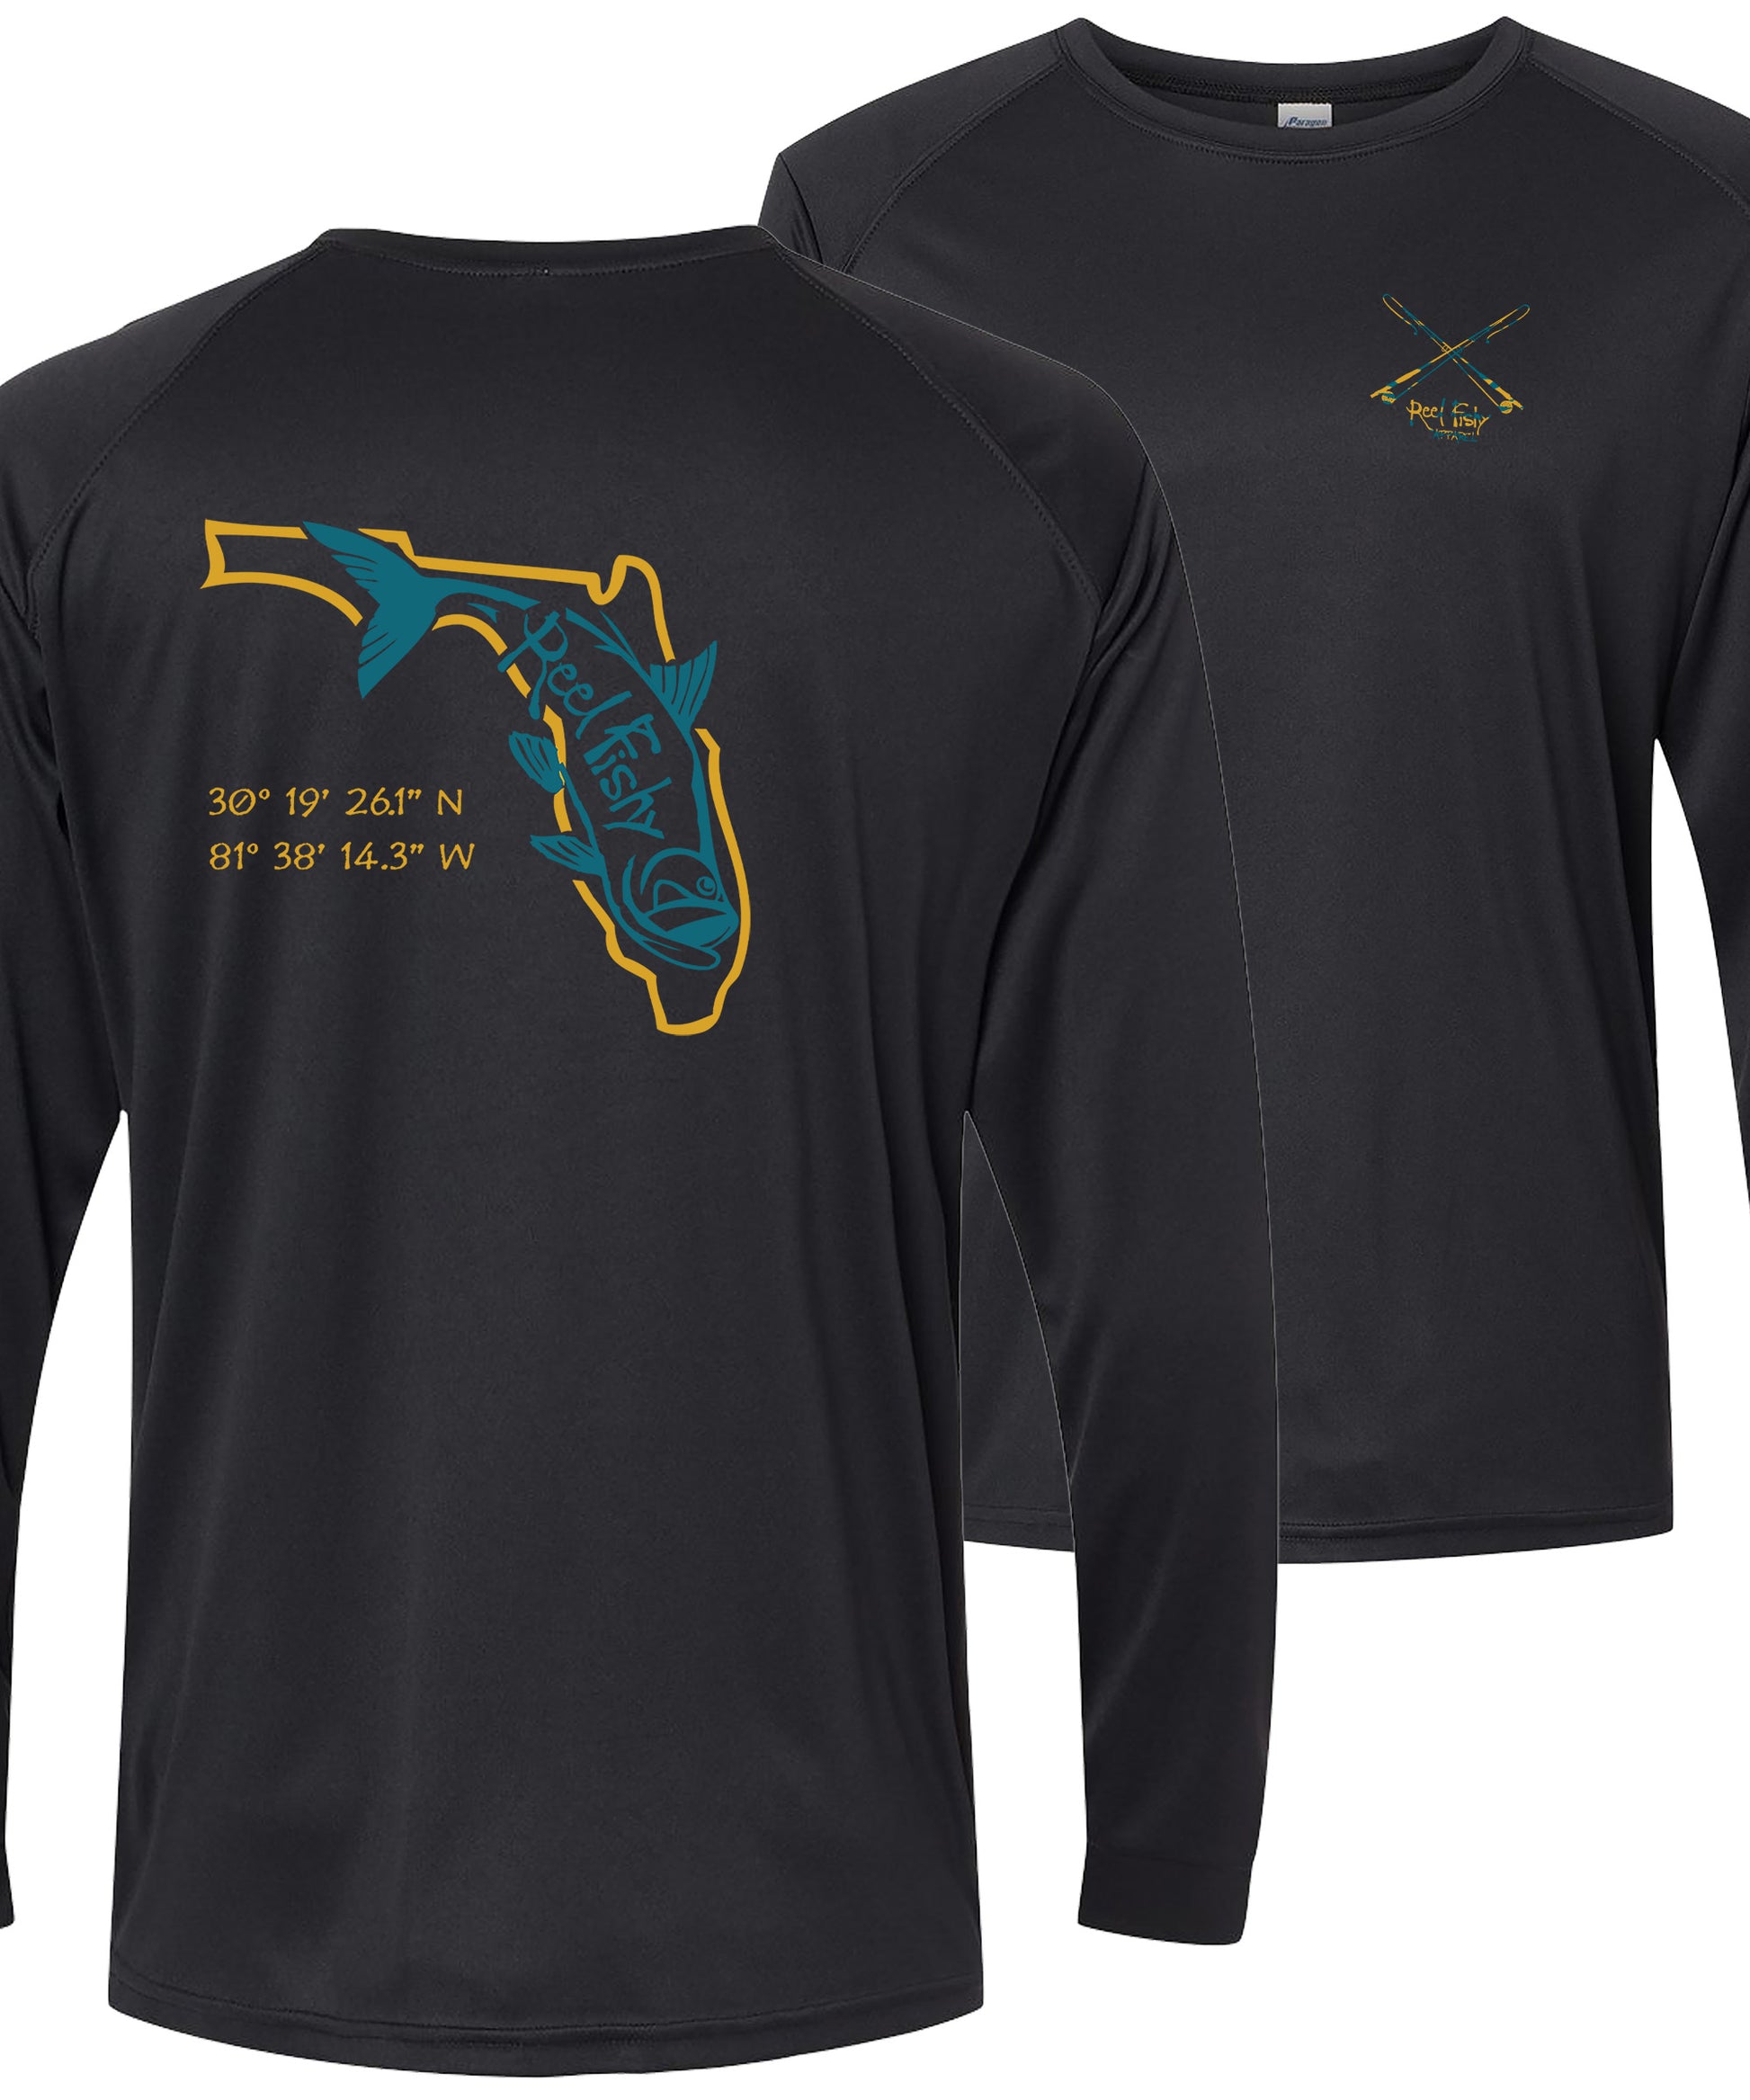 Black/Teal Tarpon State of FL Team Performance Shirts 50+UV Sun Protection Long Sleeves